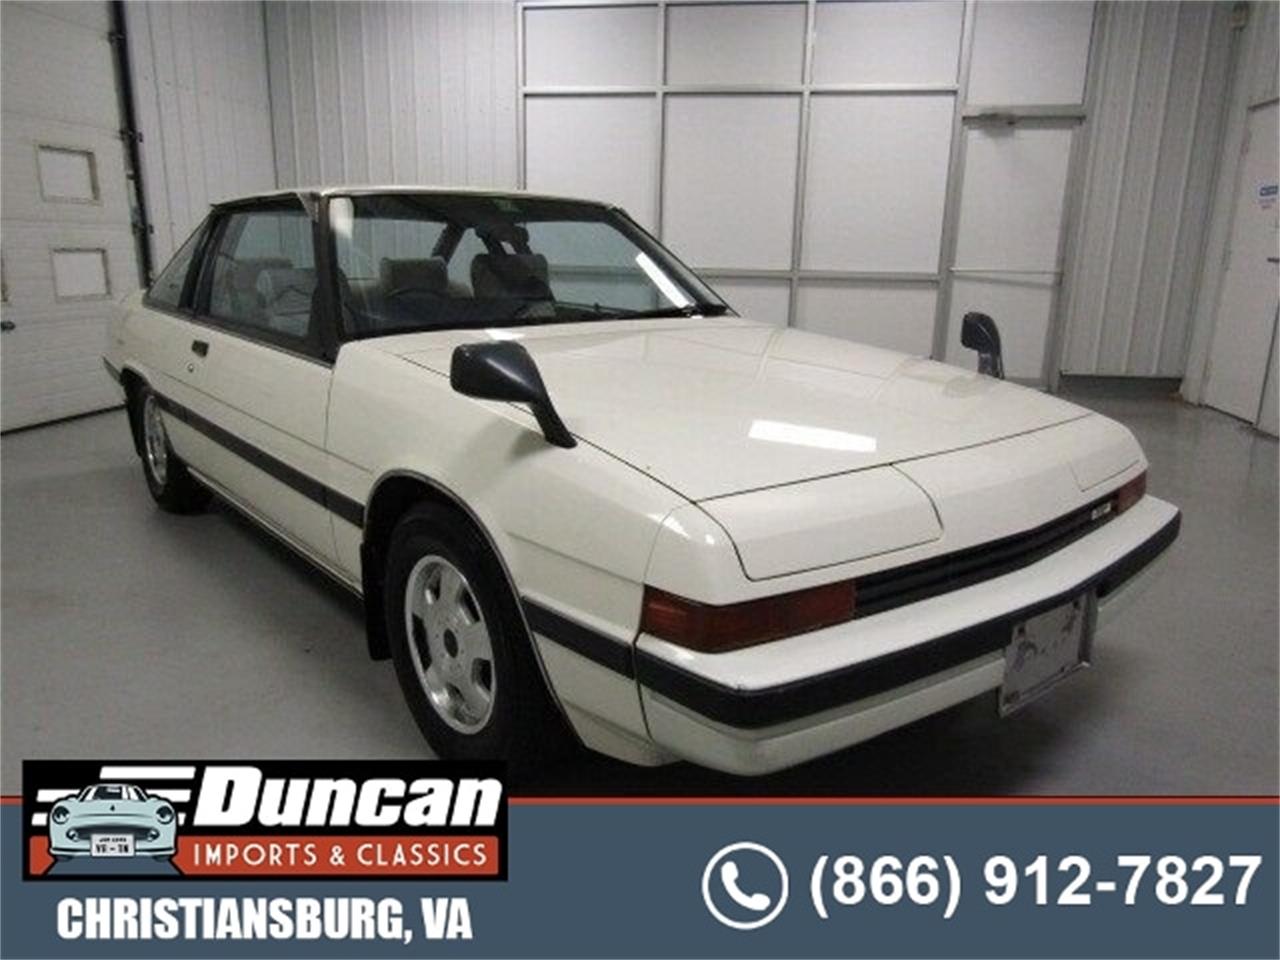 For Sale: 1981 Mazda Cosmo in Christiansburg, Virginia for sale in Christiansburg, VA